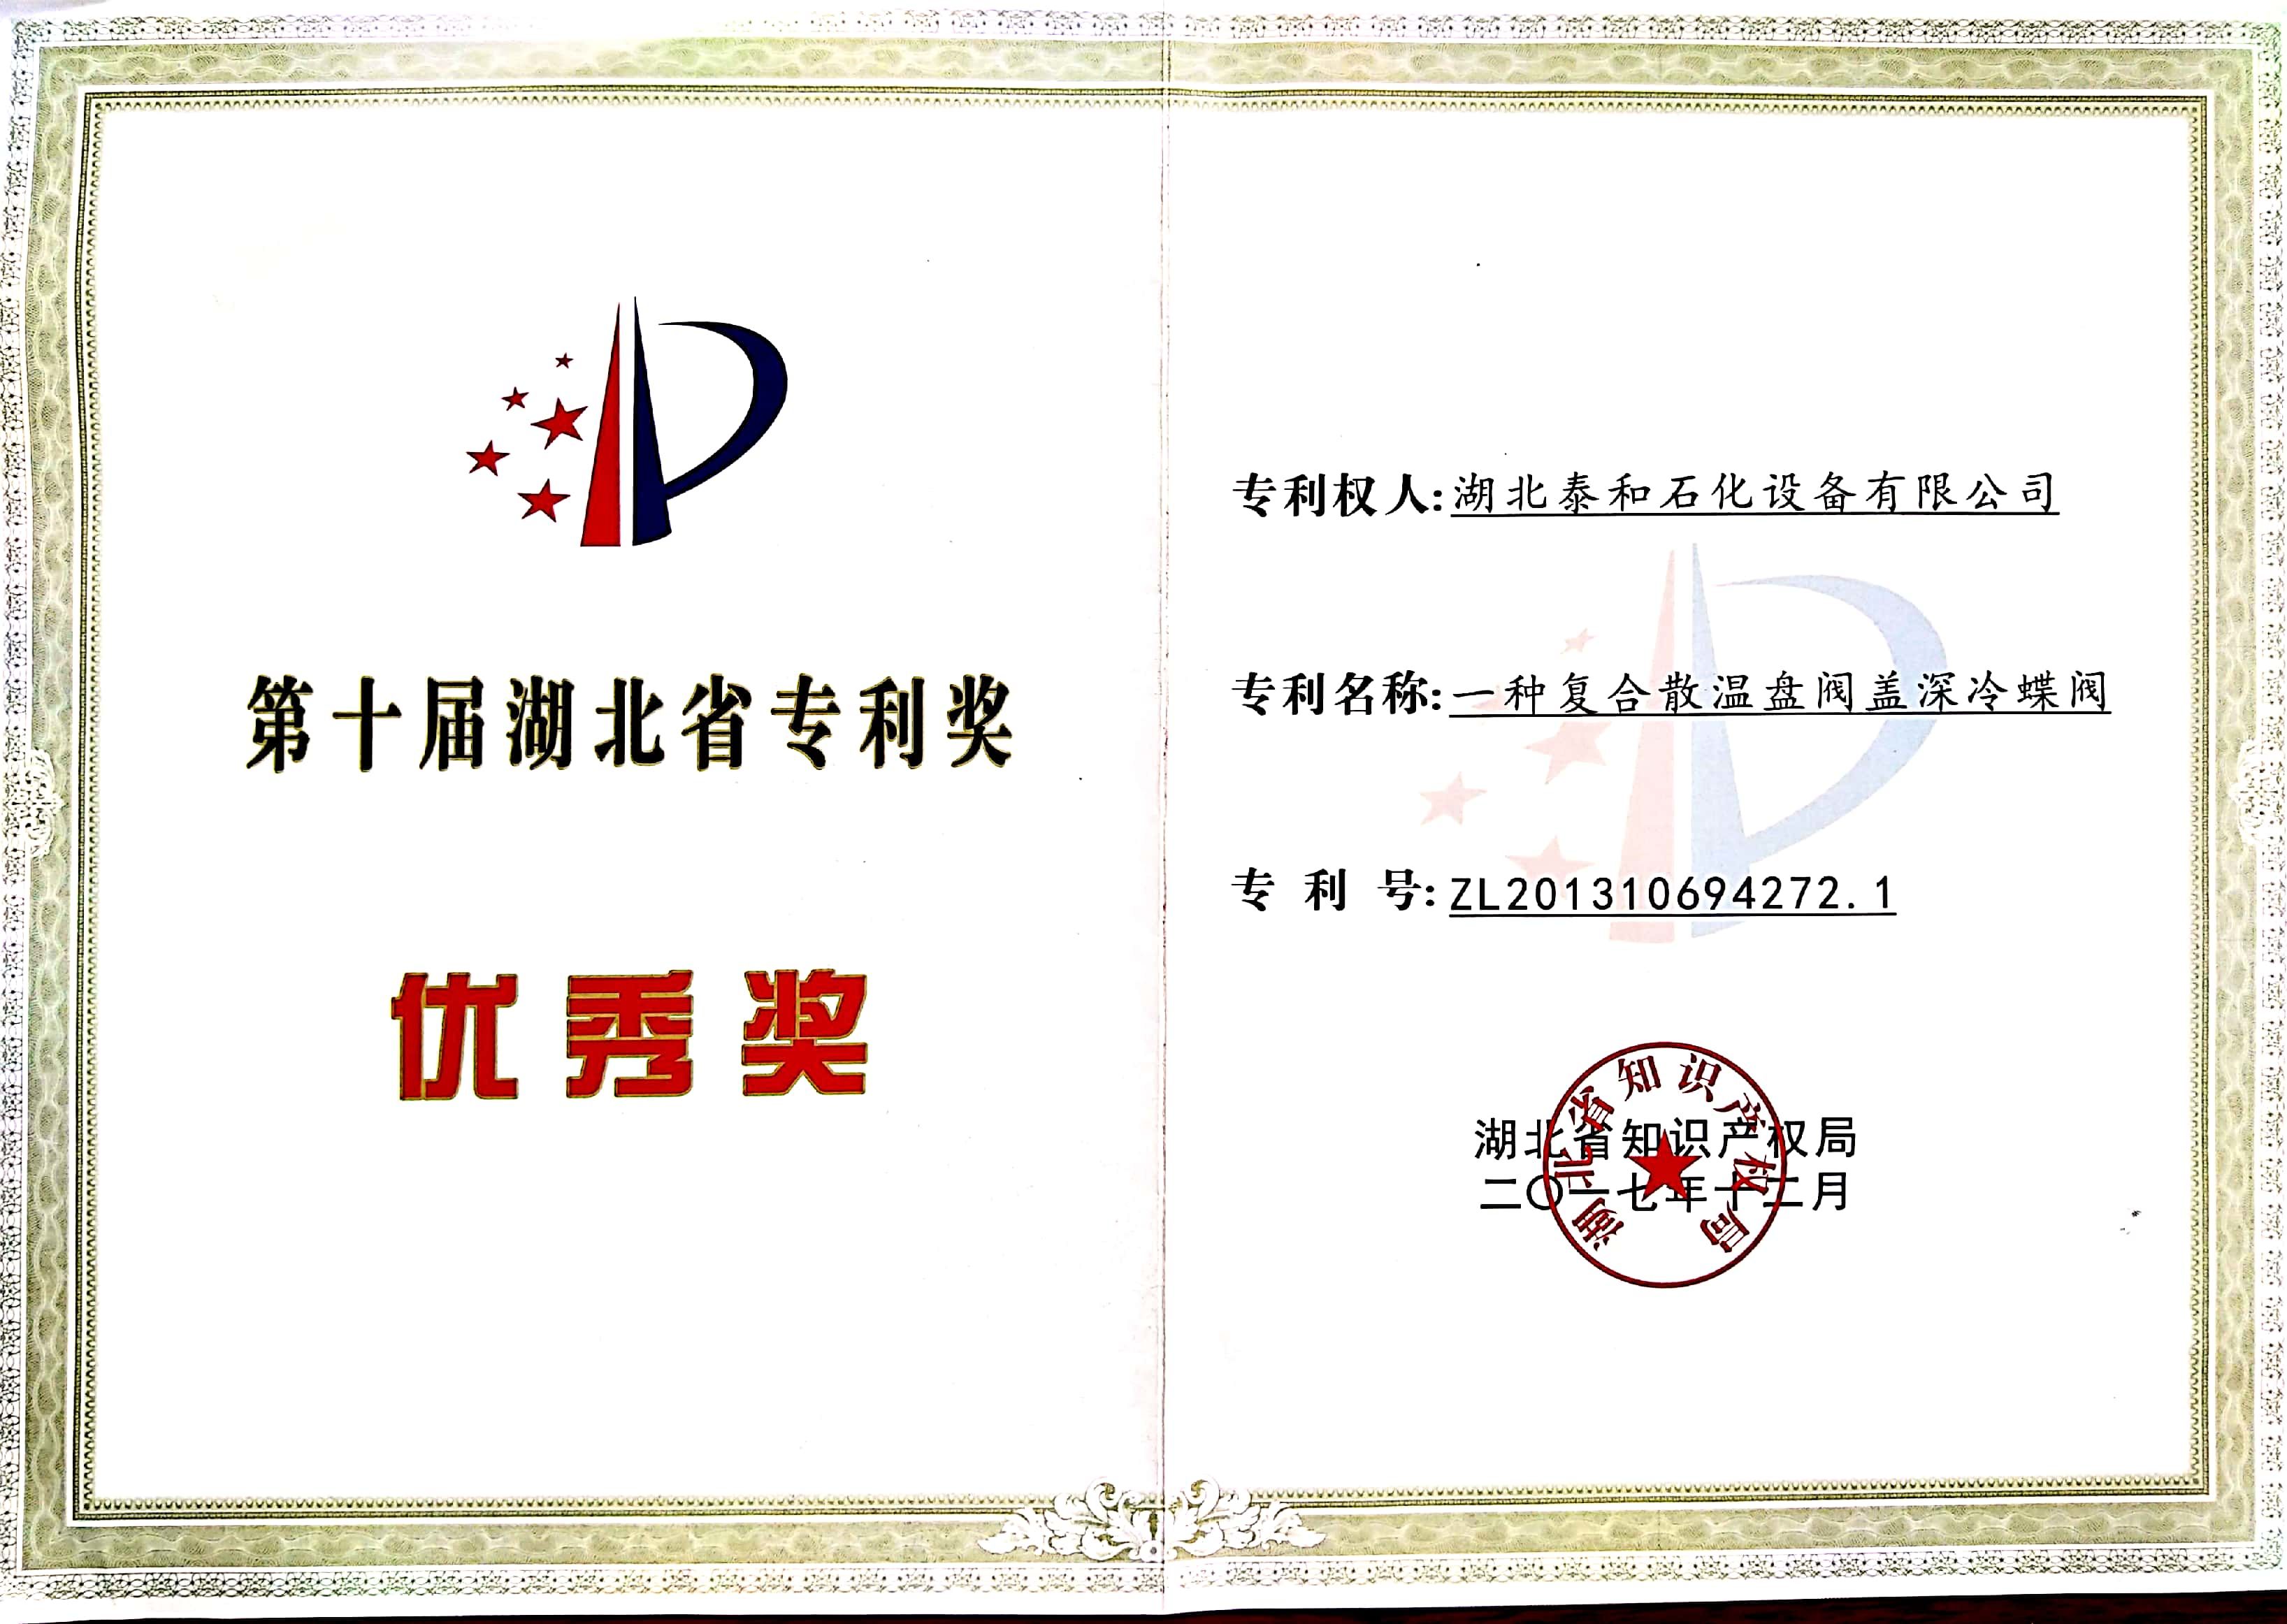 Патентная премия провинции Хубэй